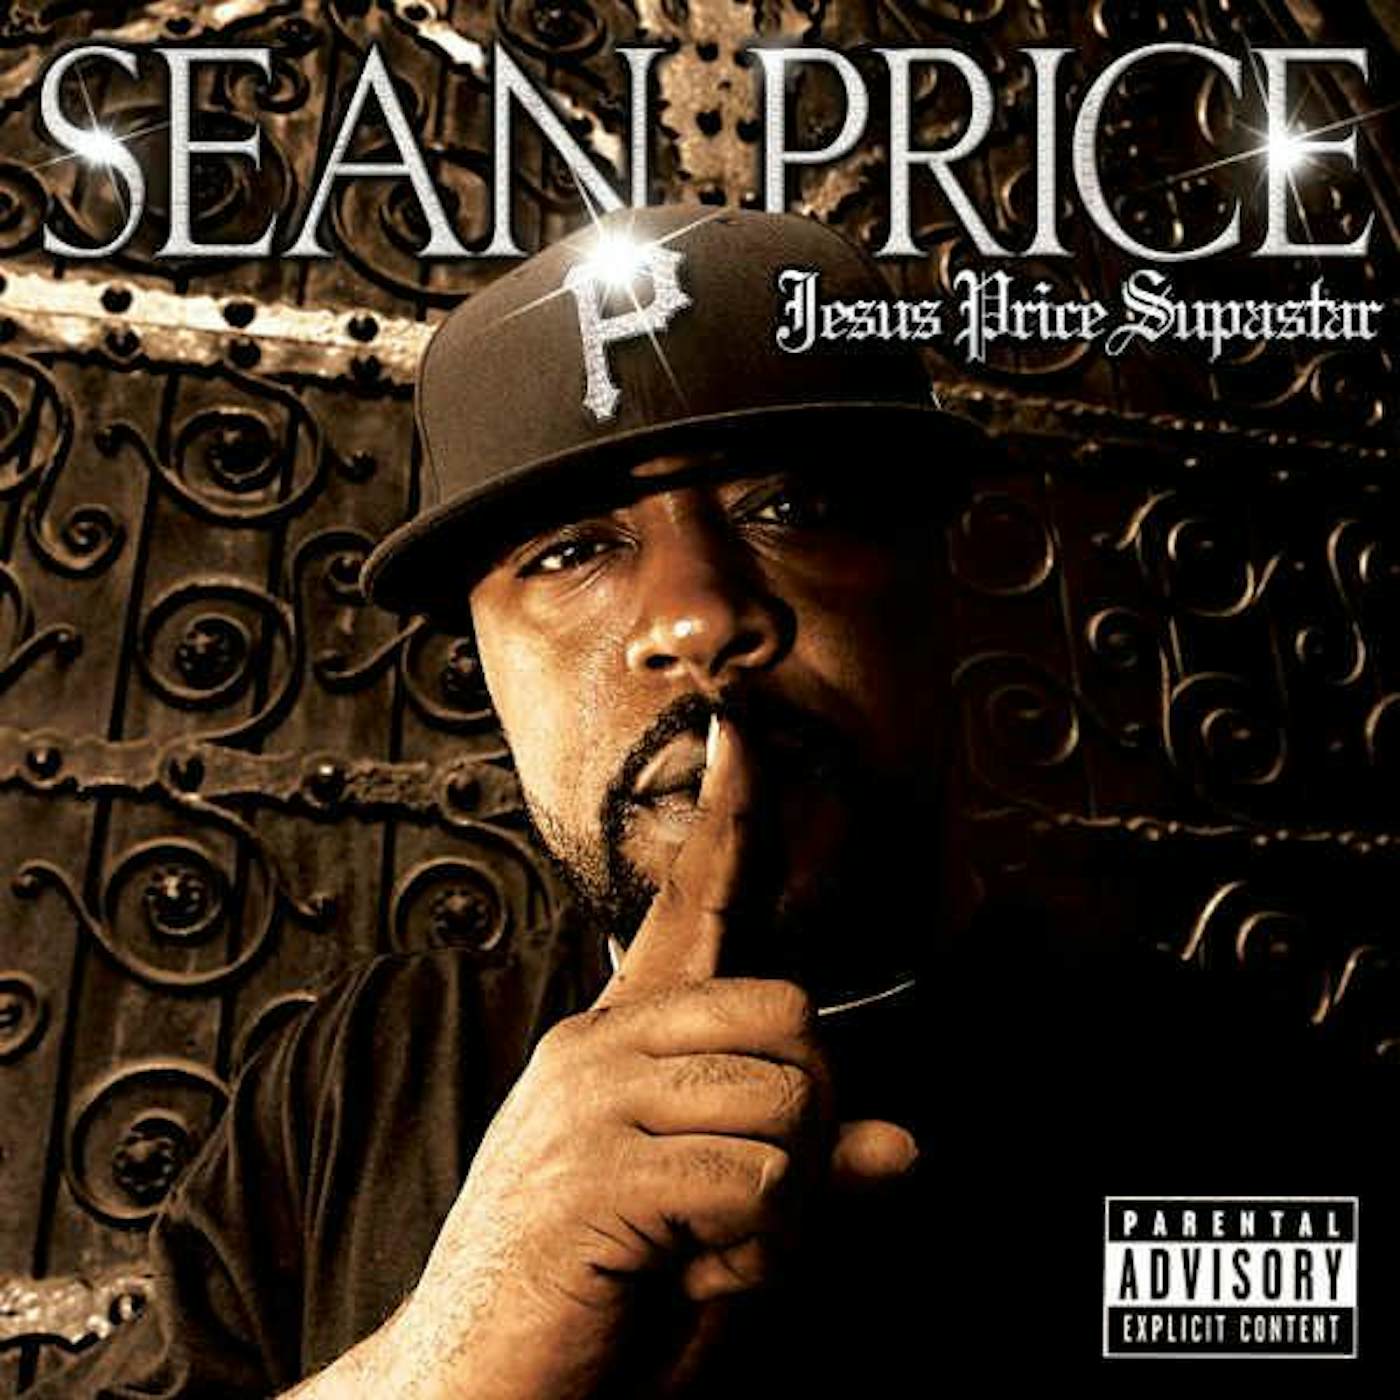 Sean Price "Jesus Price Supastar" 2xLP Vinyl